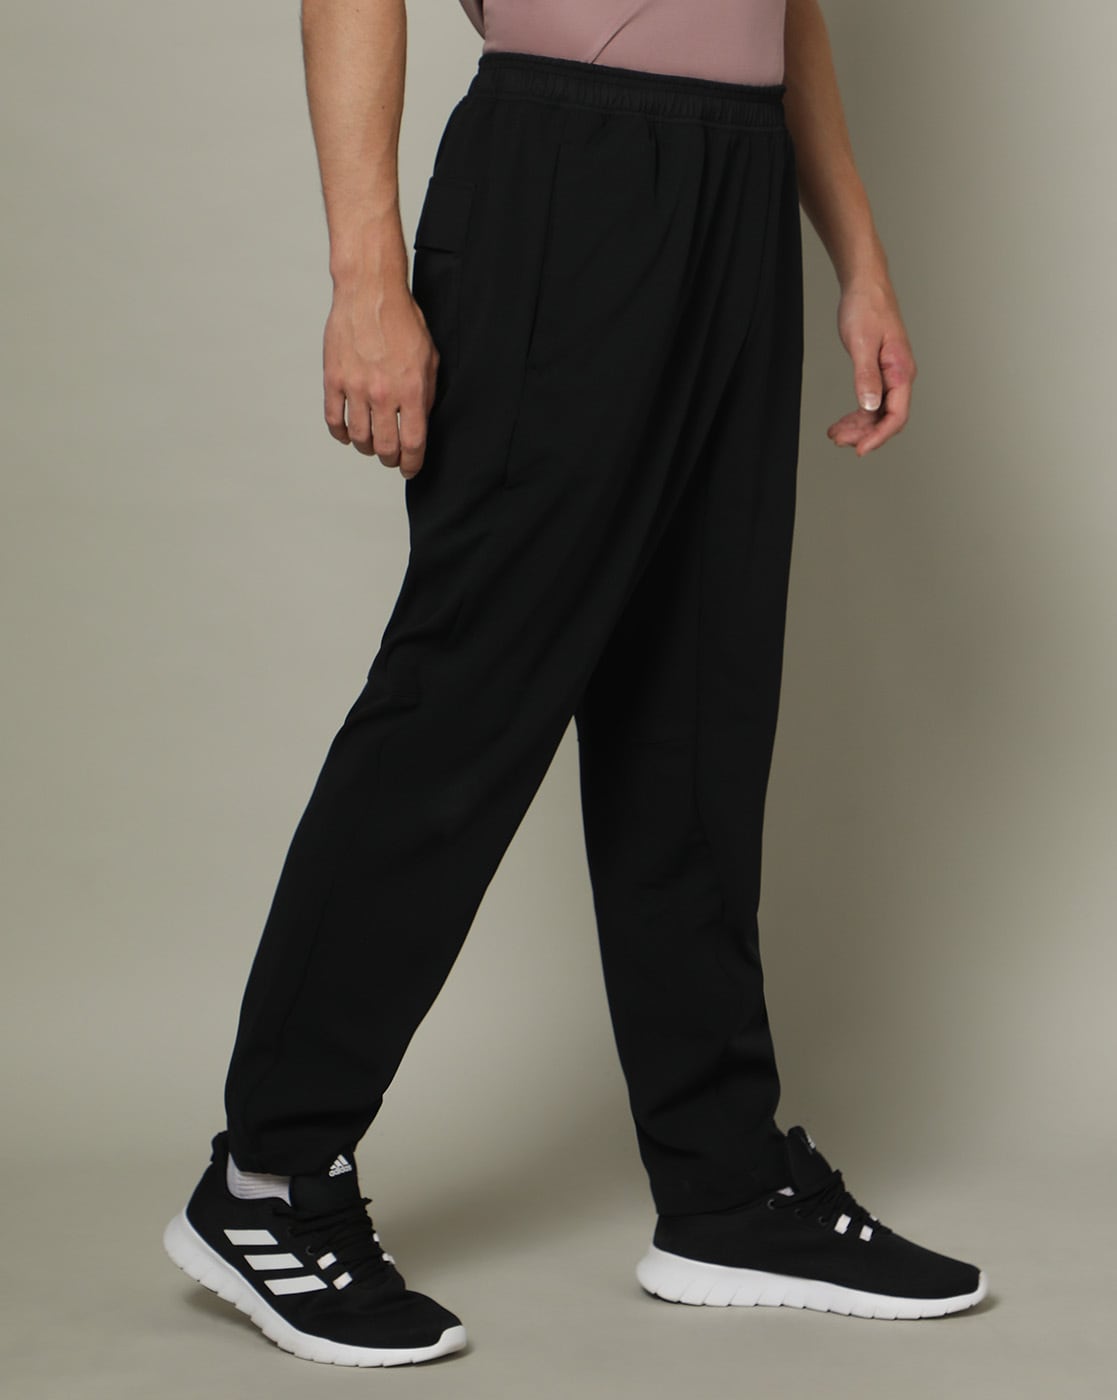 Adidas Warm Up Track Pants Adult Large Poly Black Maroon/Red Stripe Leg Zip  | eBay